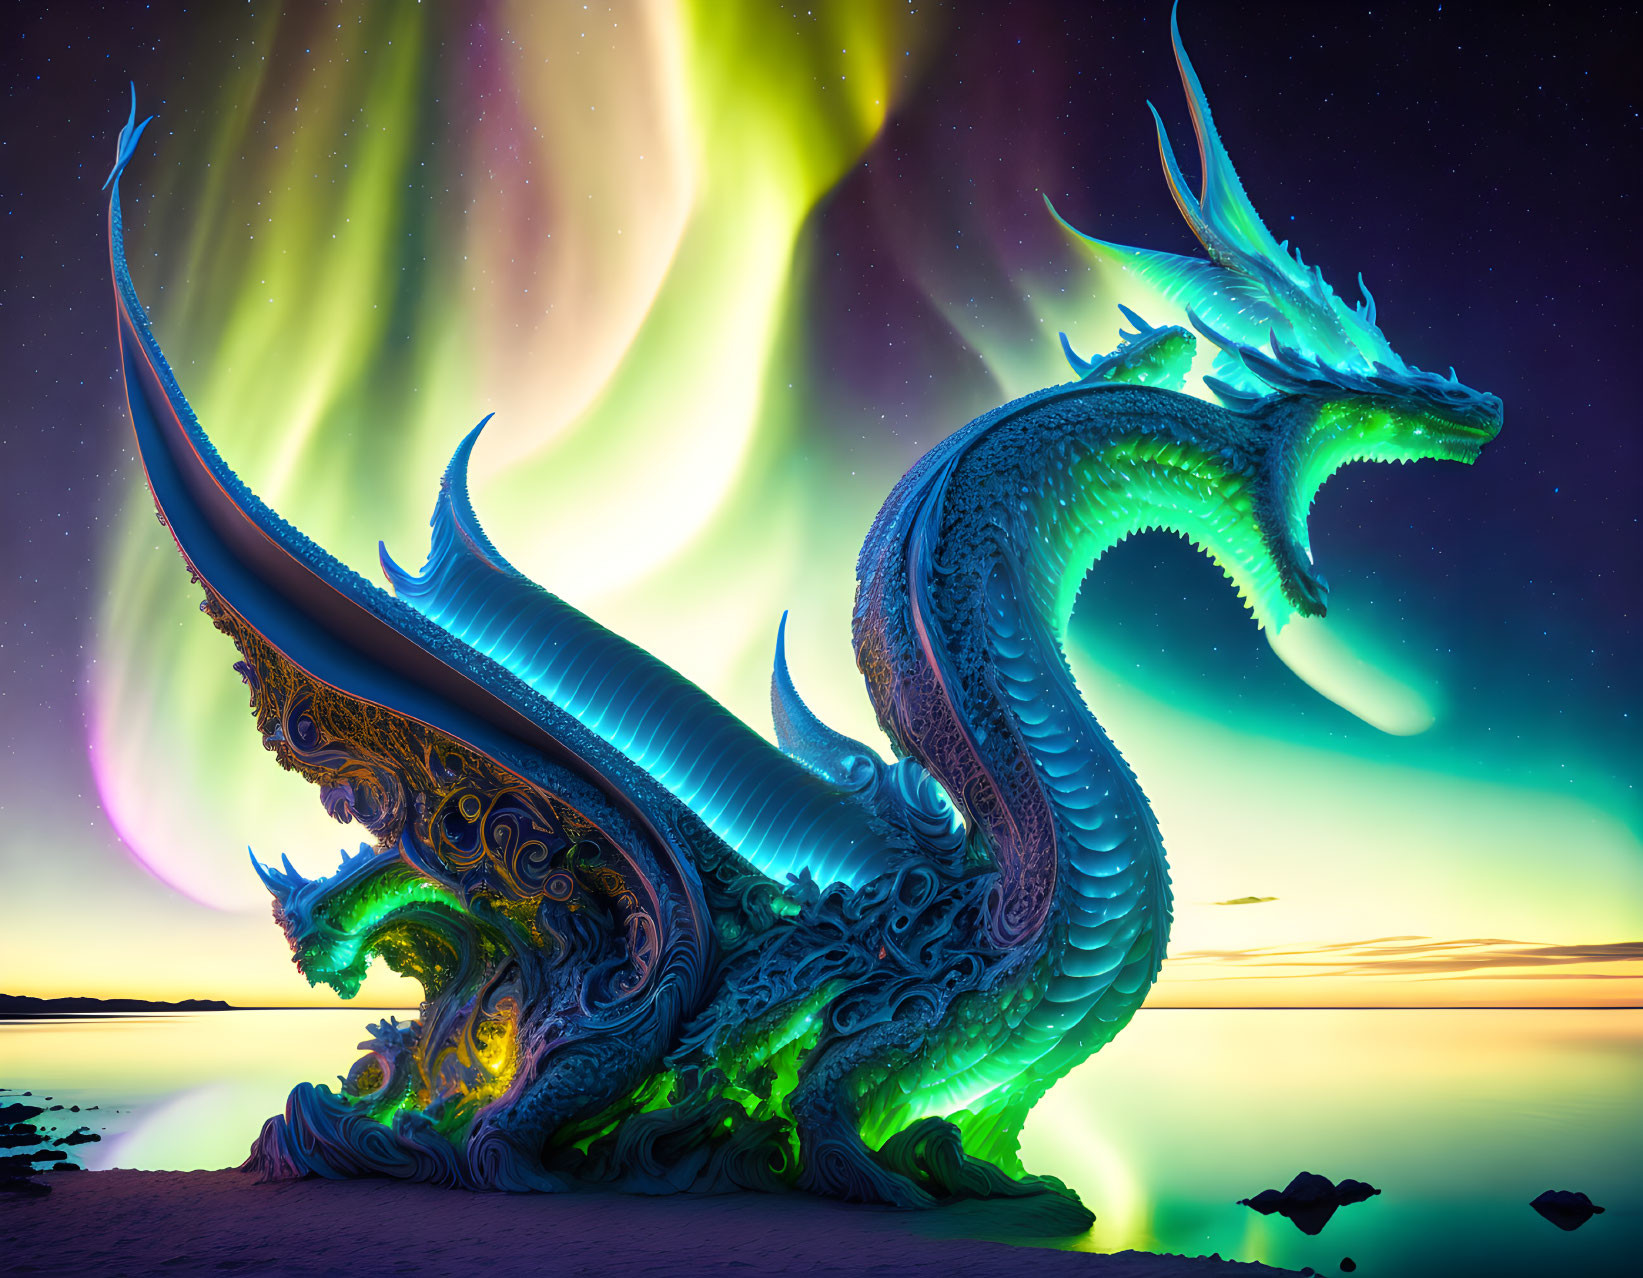 Intricate Blue Dragon under Vibrant Aurora Borealis